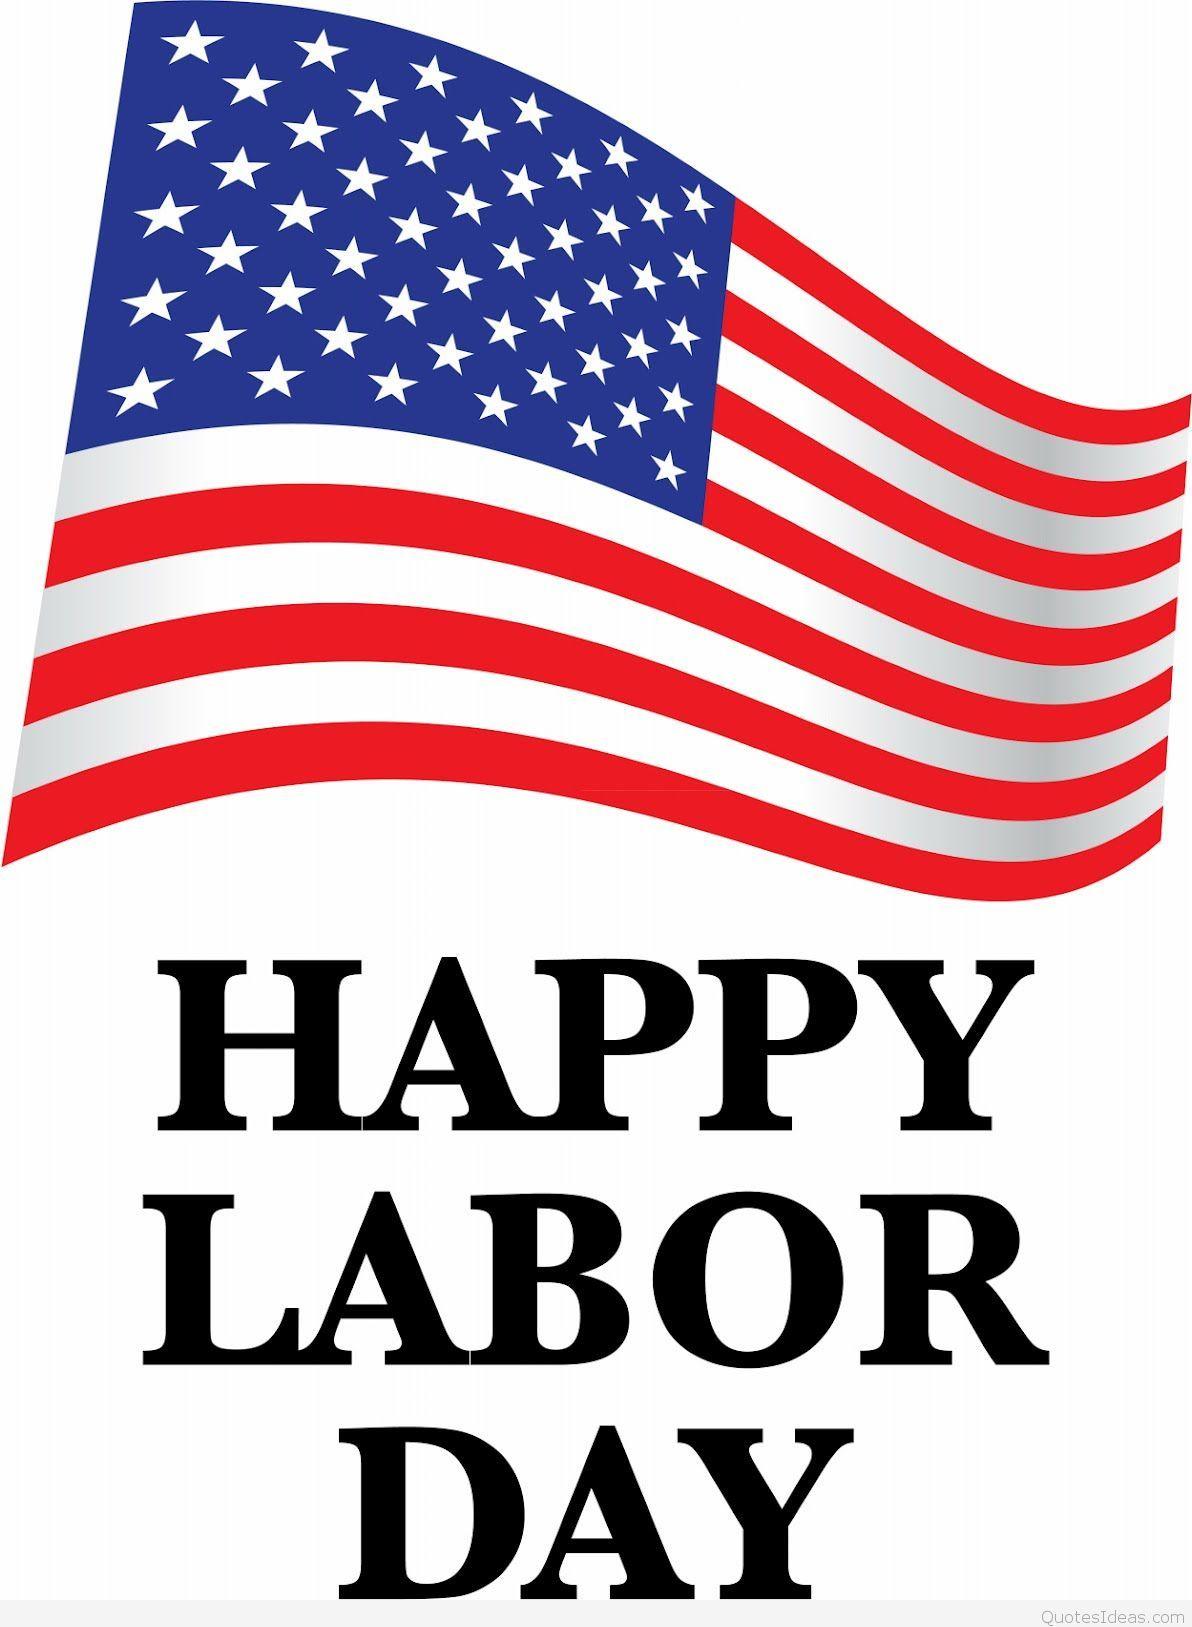 Happy Labor day